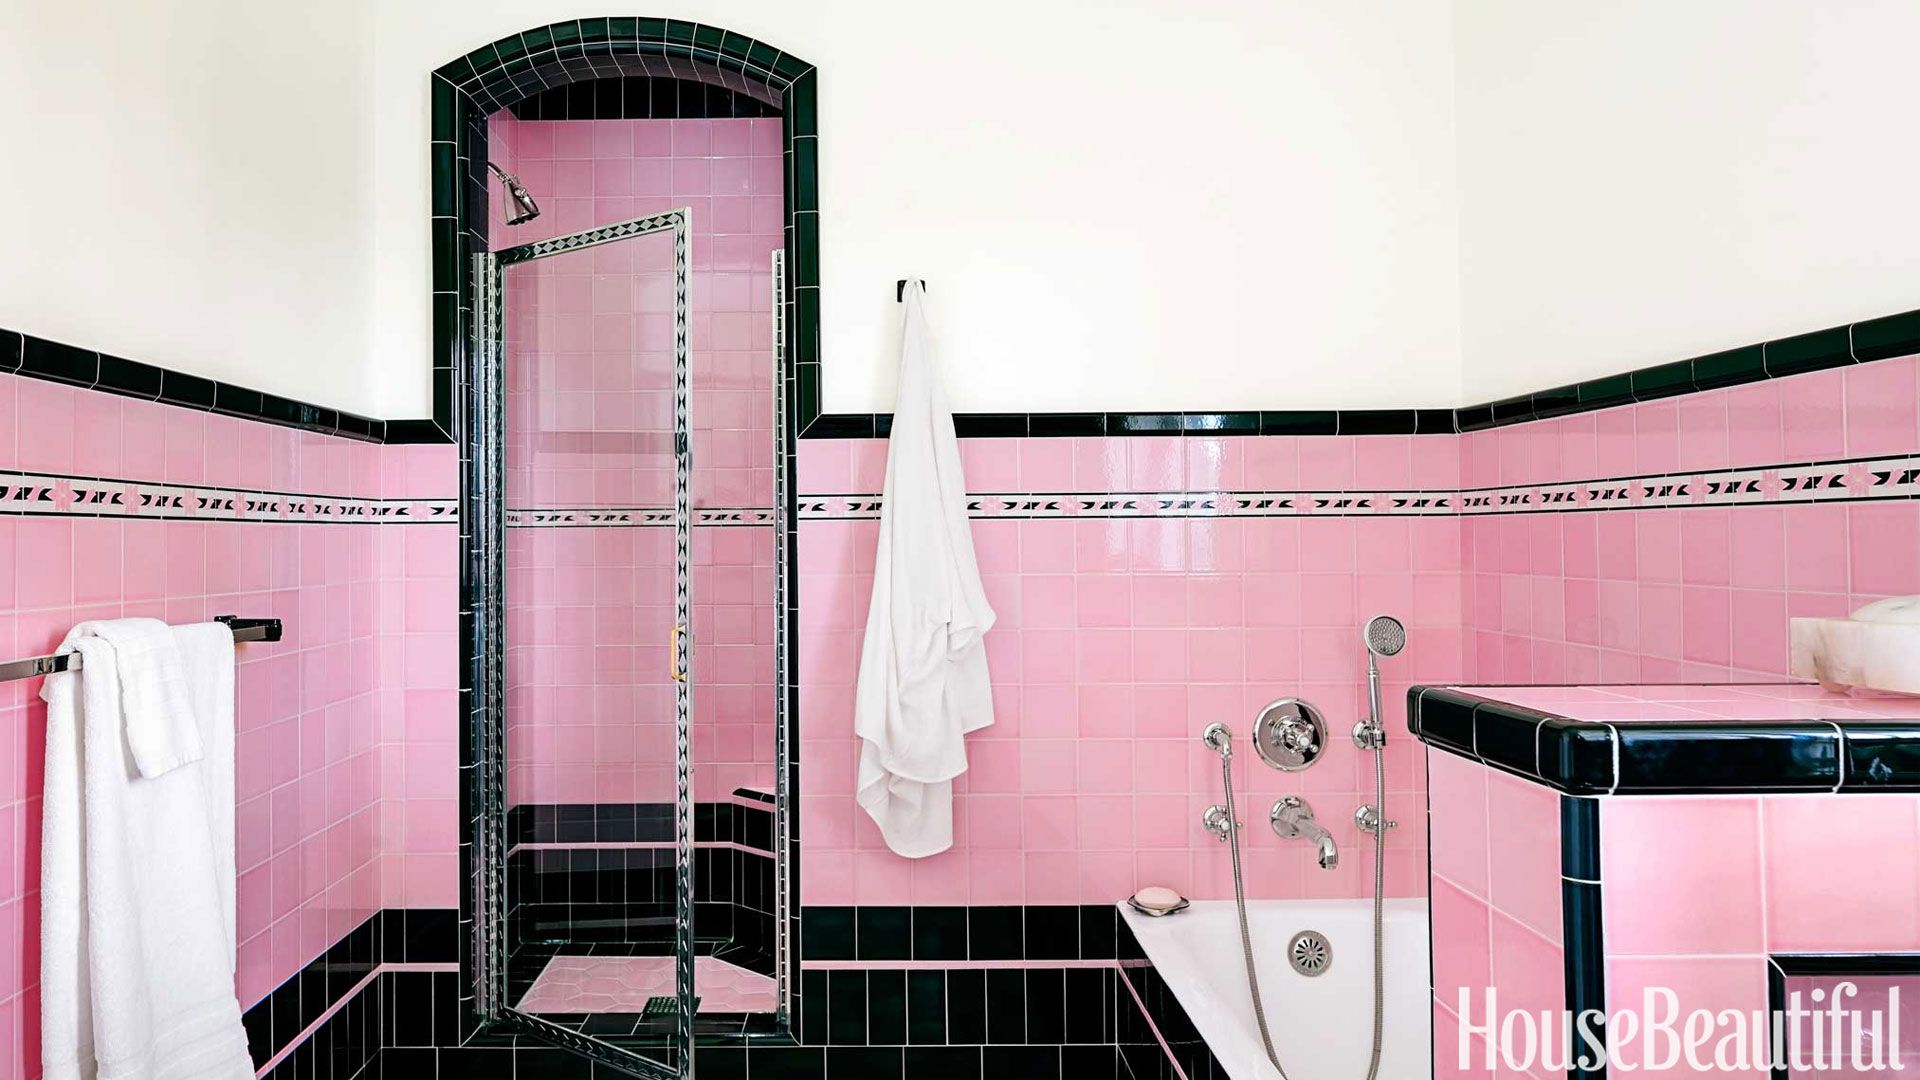 1930s Bathroom Design, Vintage Bathroom Tiles